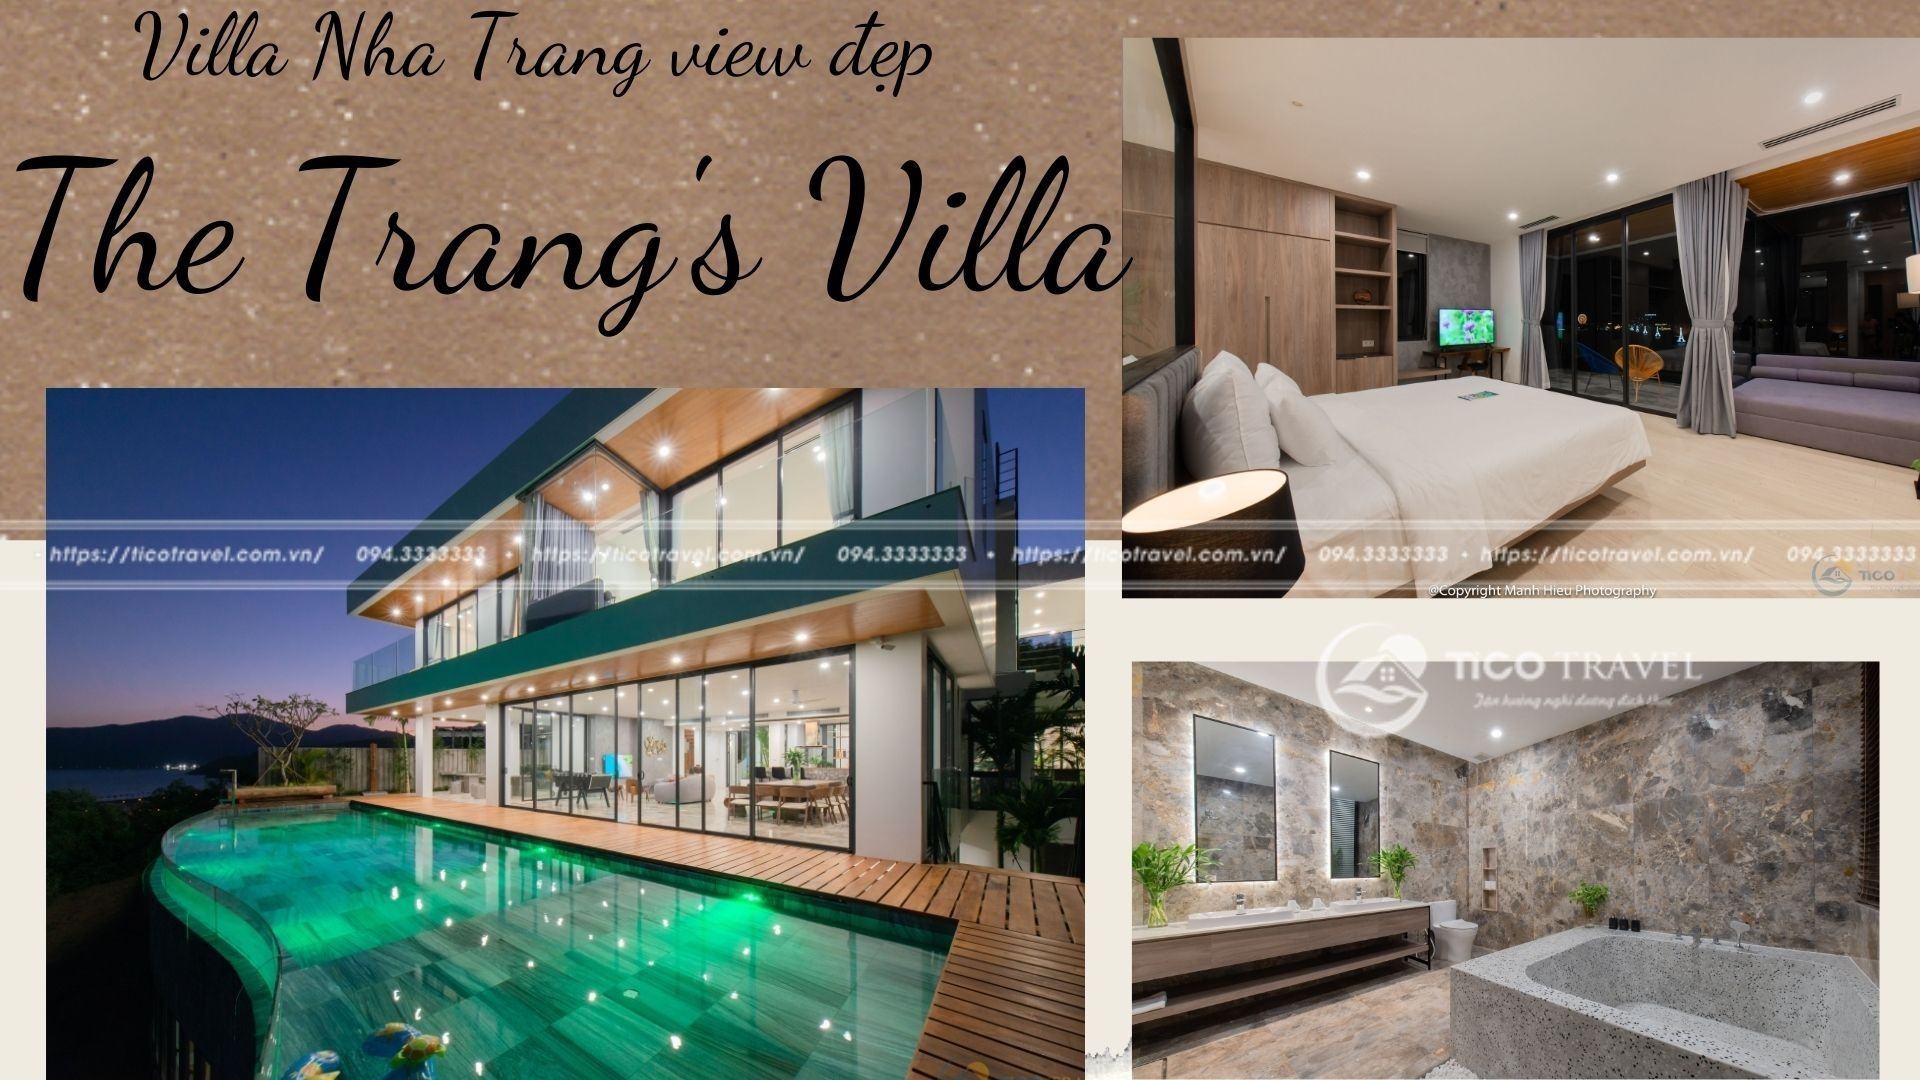 The Trang’s Villa 